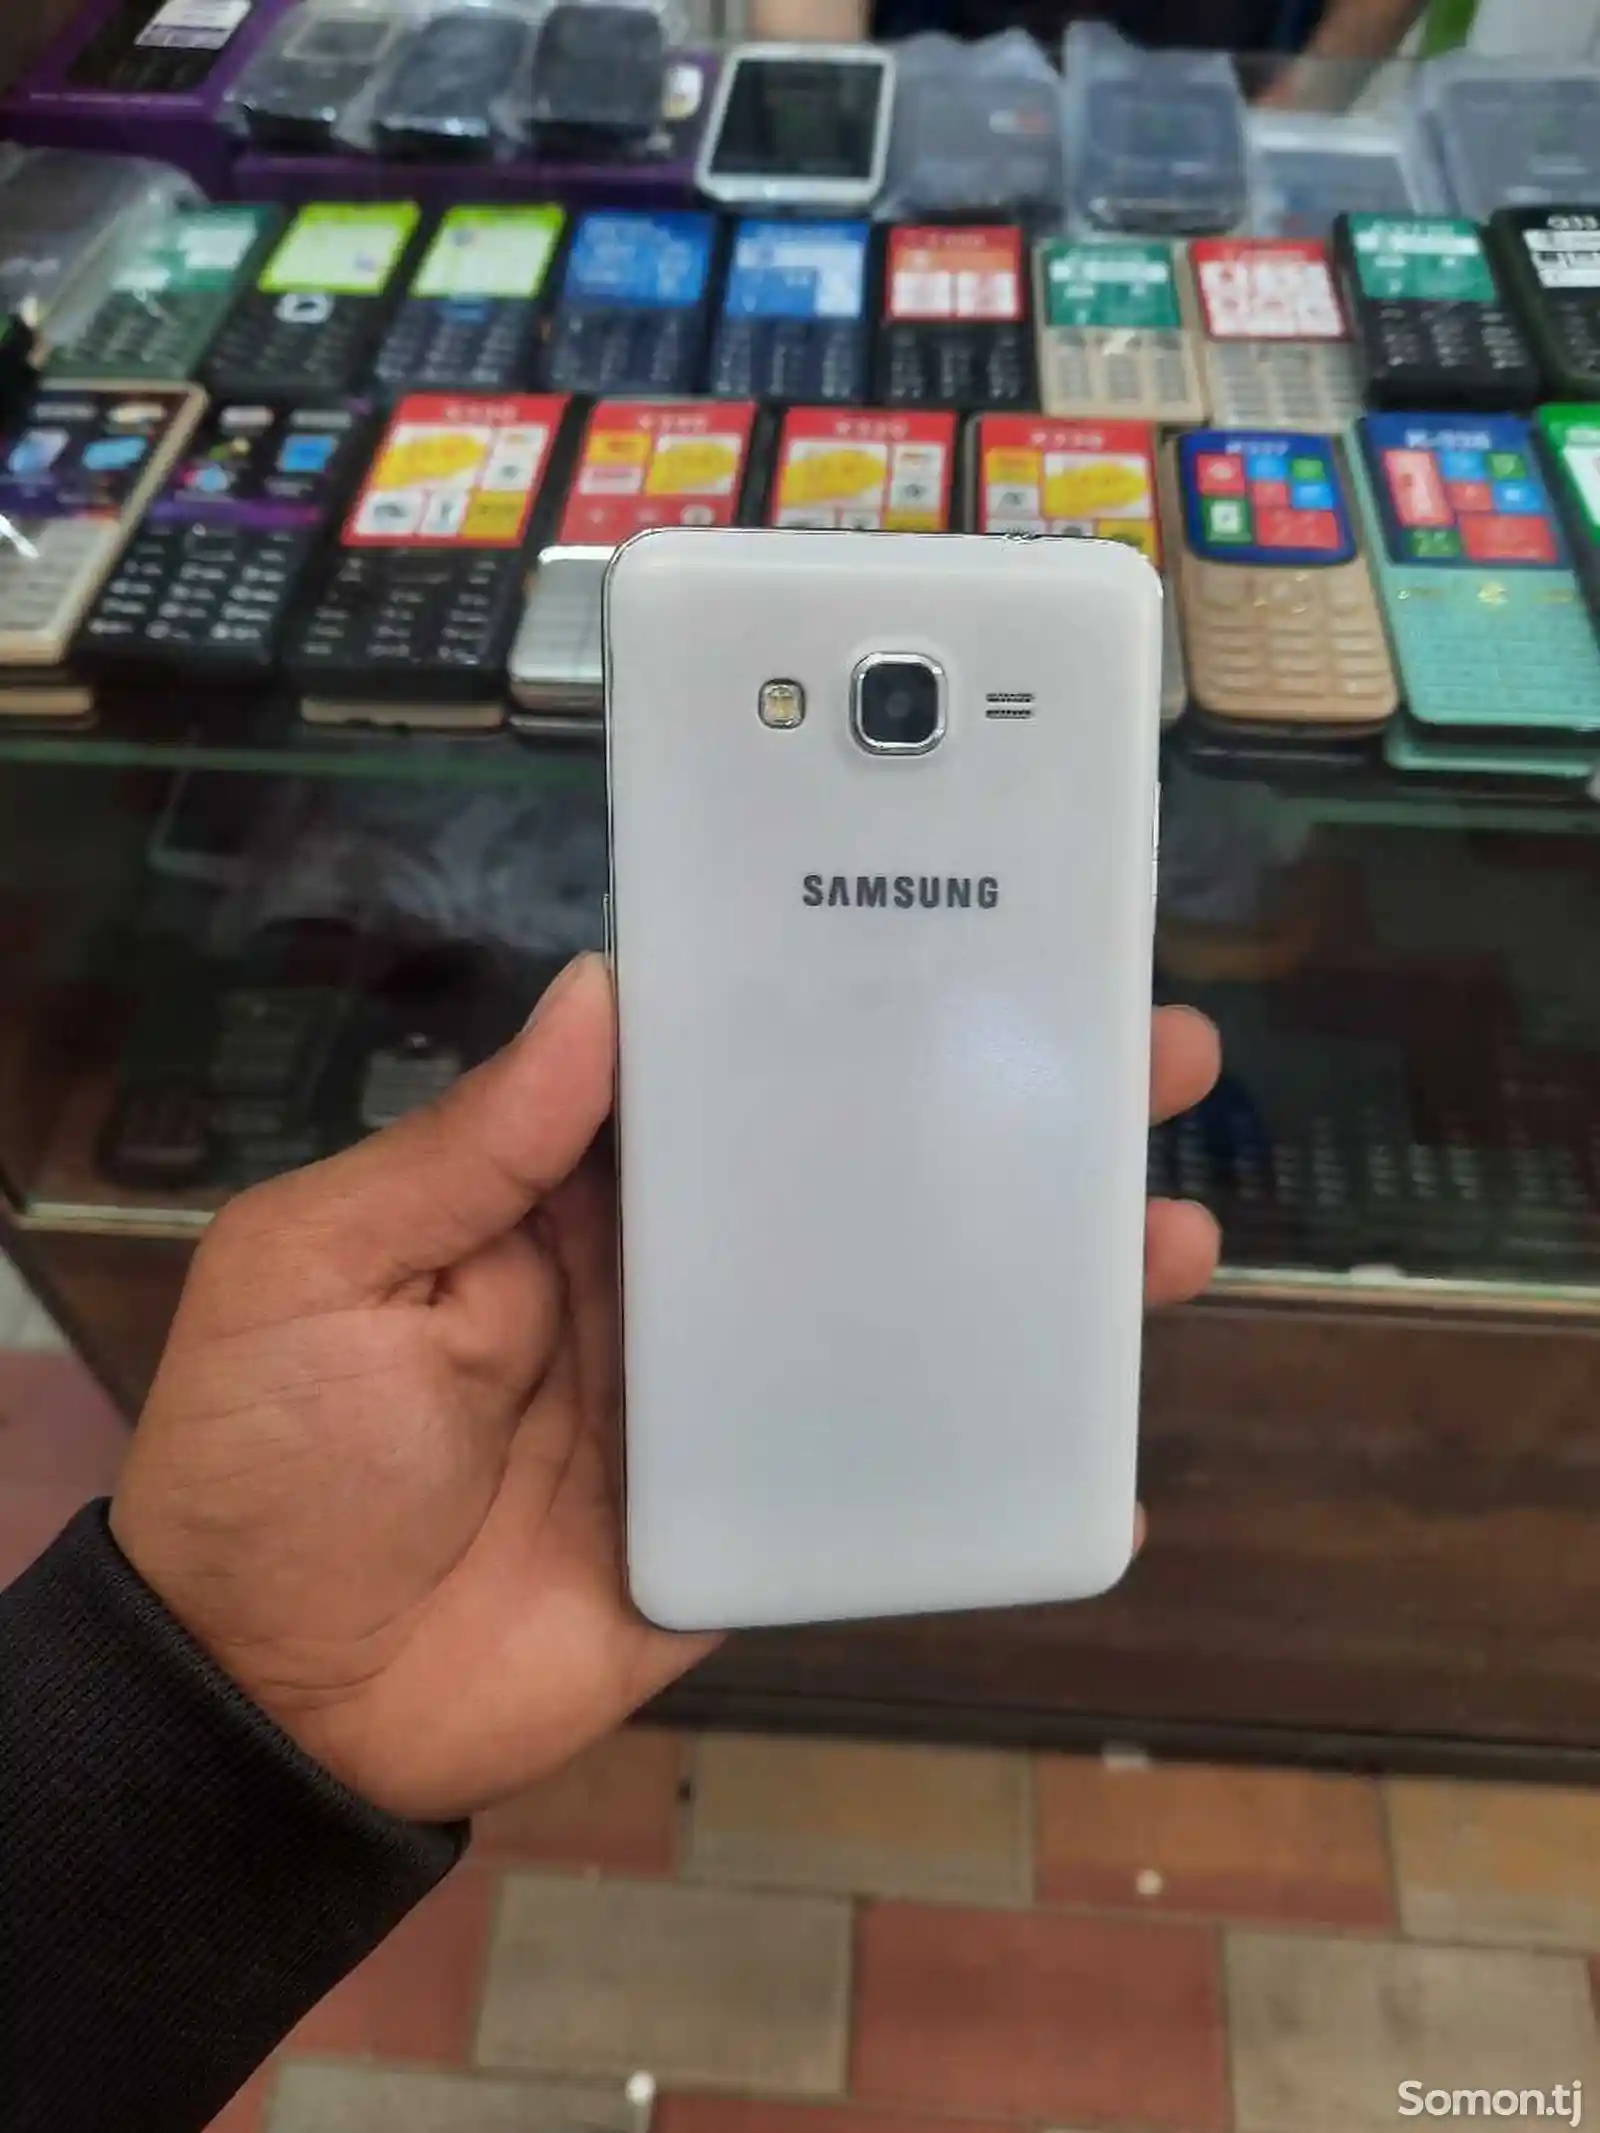 Samsung Galaxy Grand Prime-4